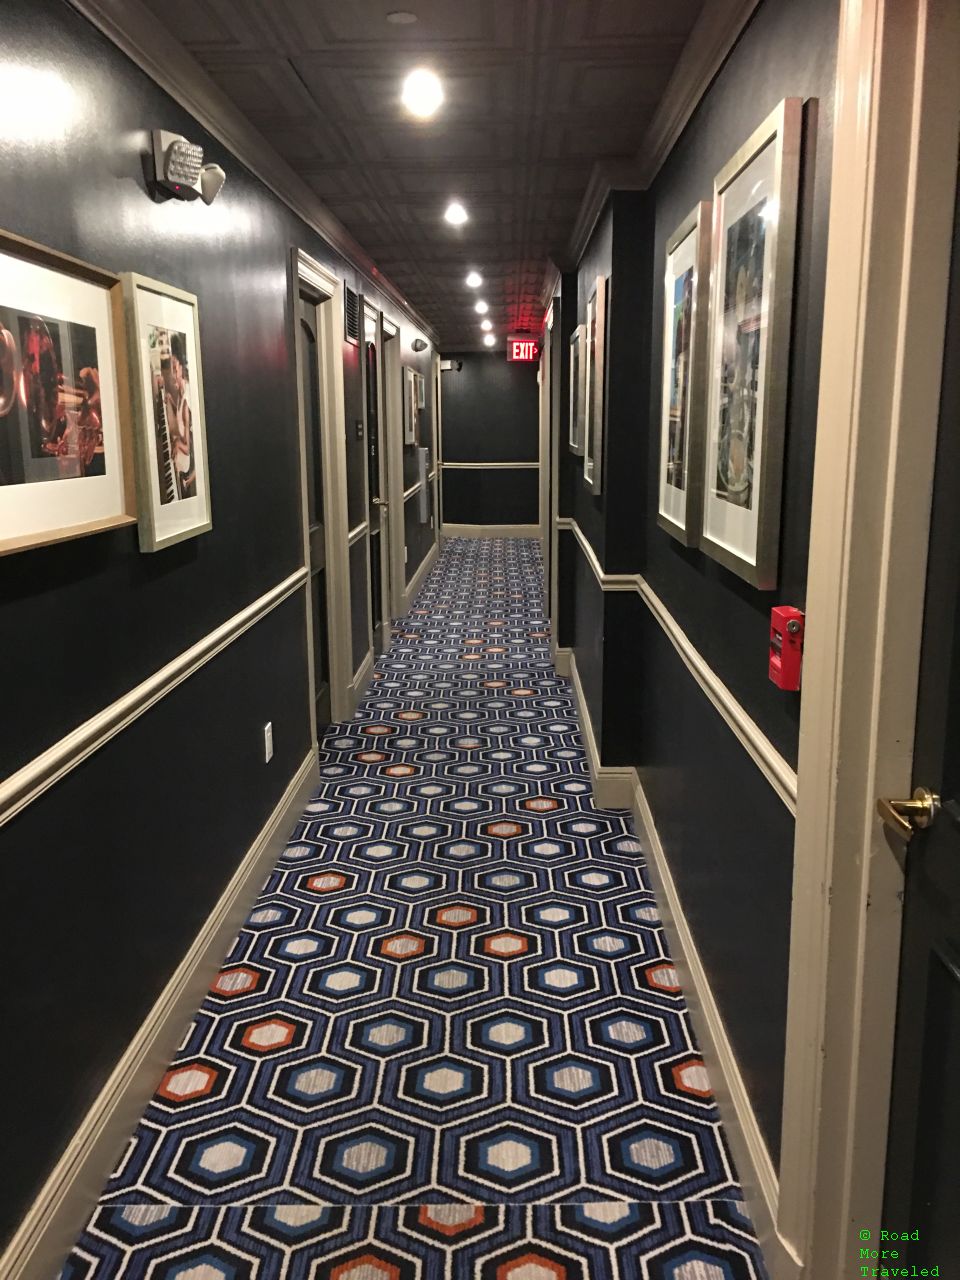 Q&C Hotel guest floor corridors